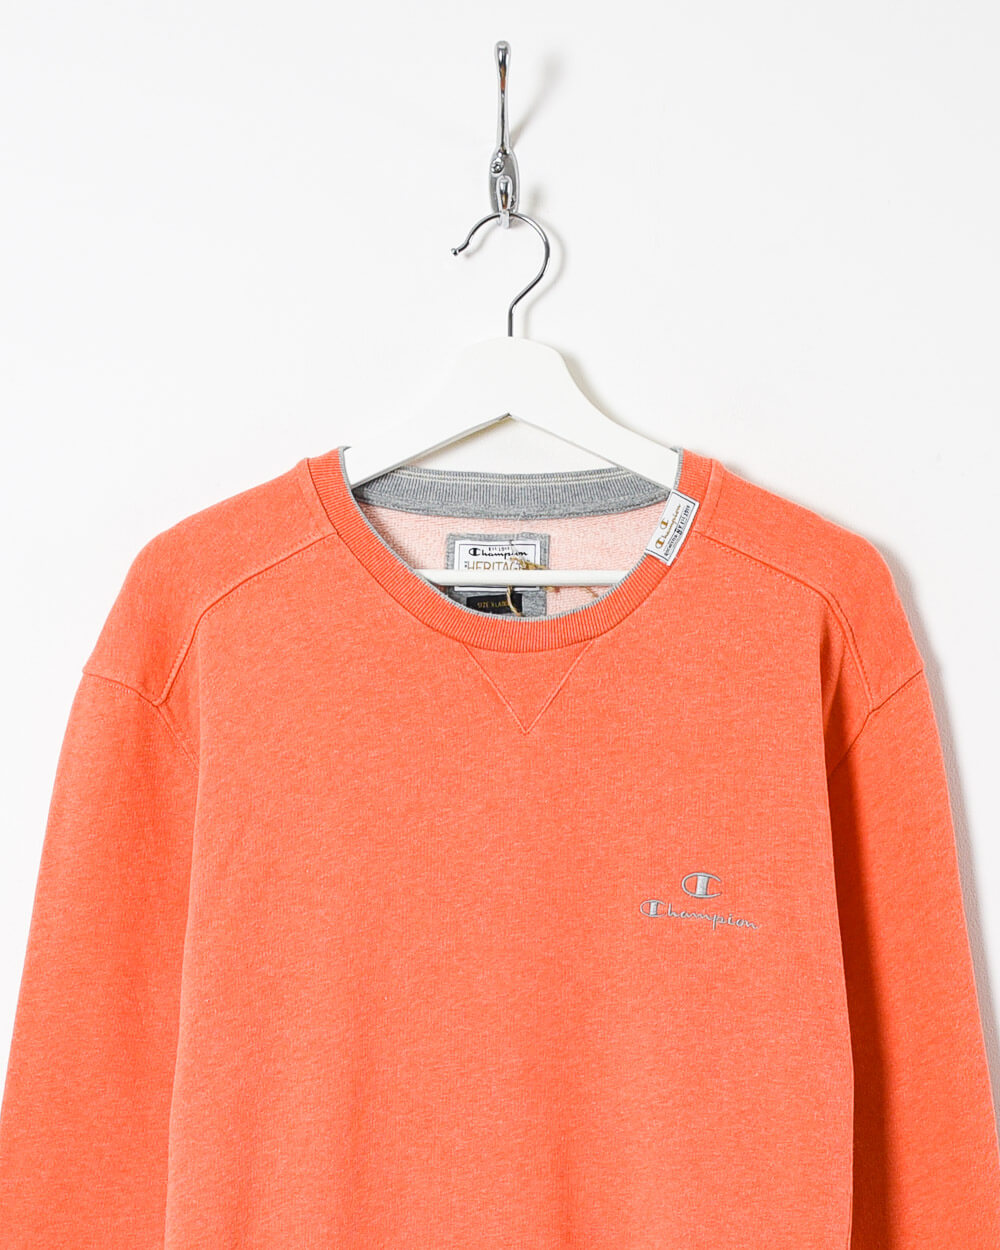 Orange Champion Sweatshirt - Large